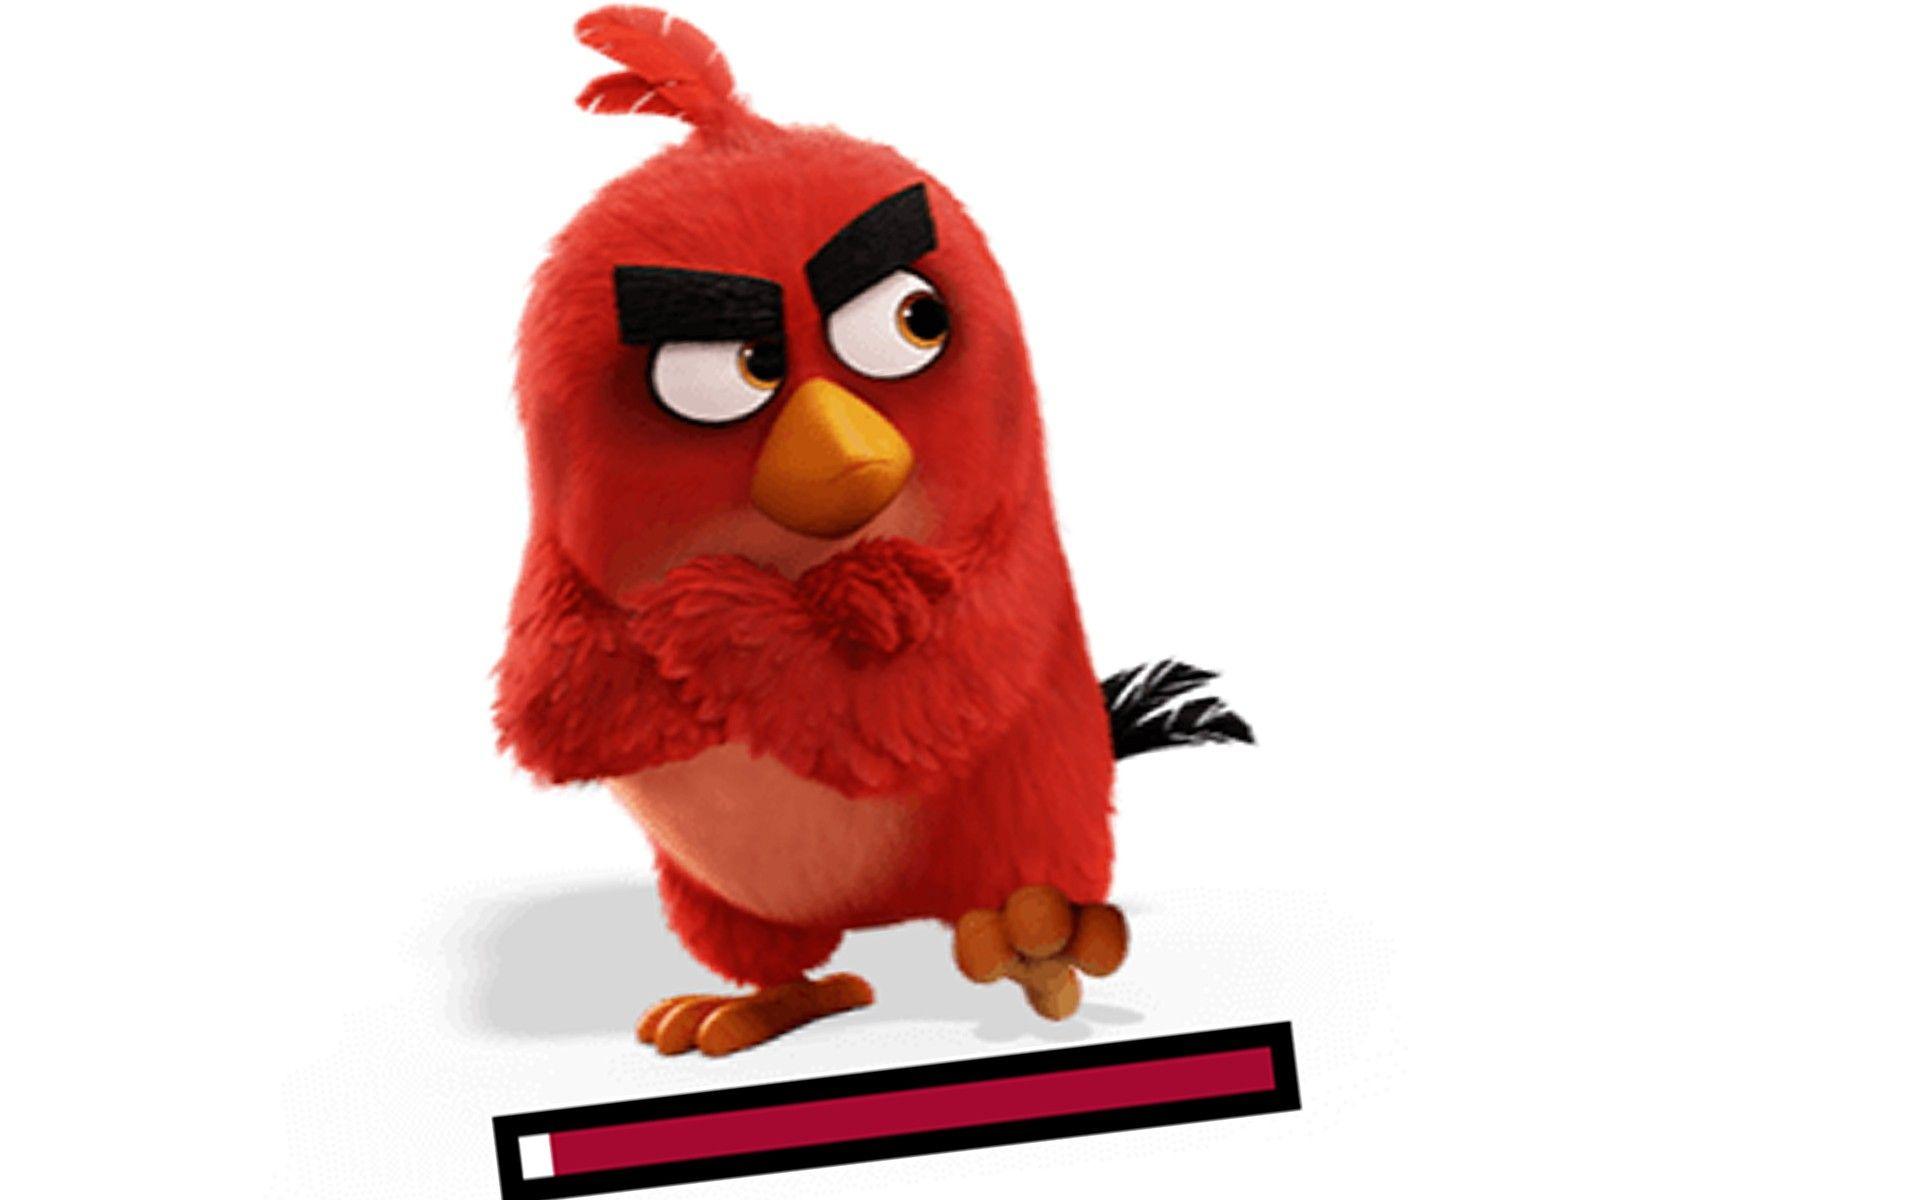 Movies RED Angry Birds Movie wallpaper Desktop, Phone, Tablet